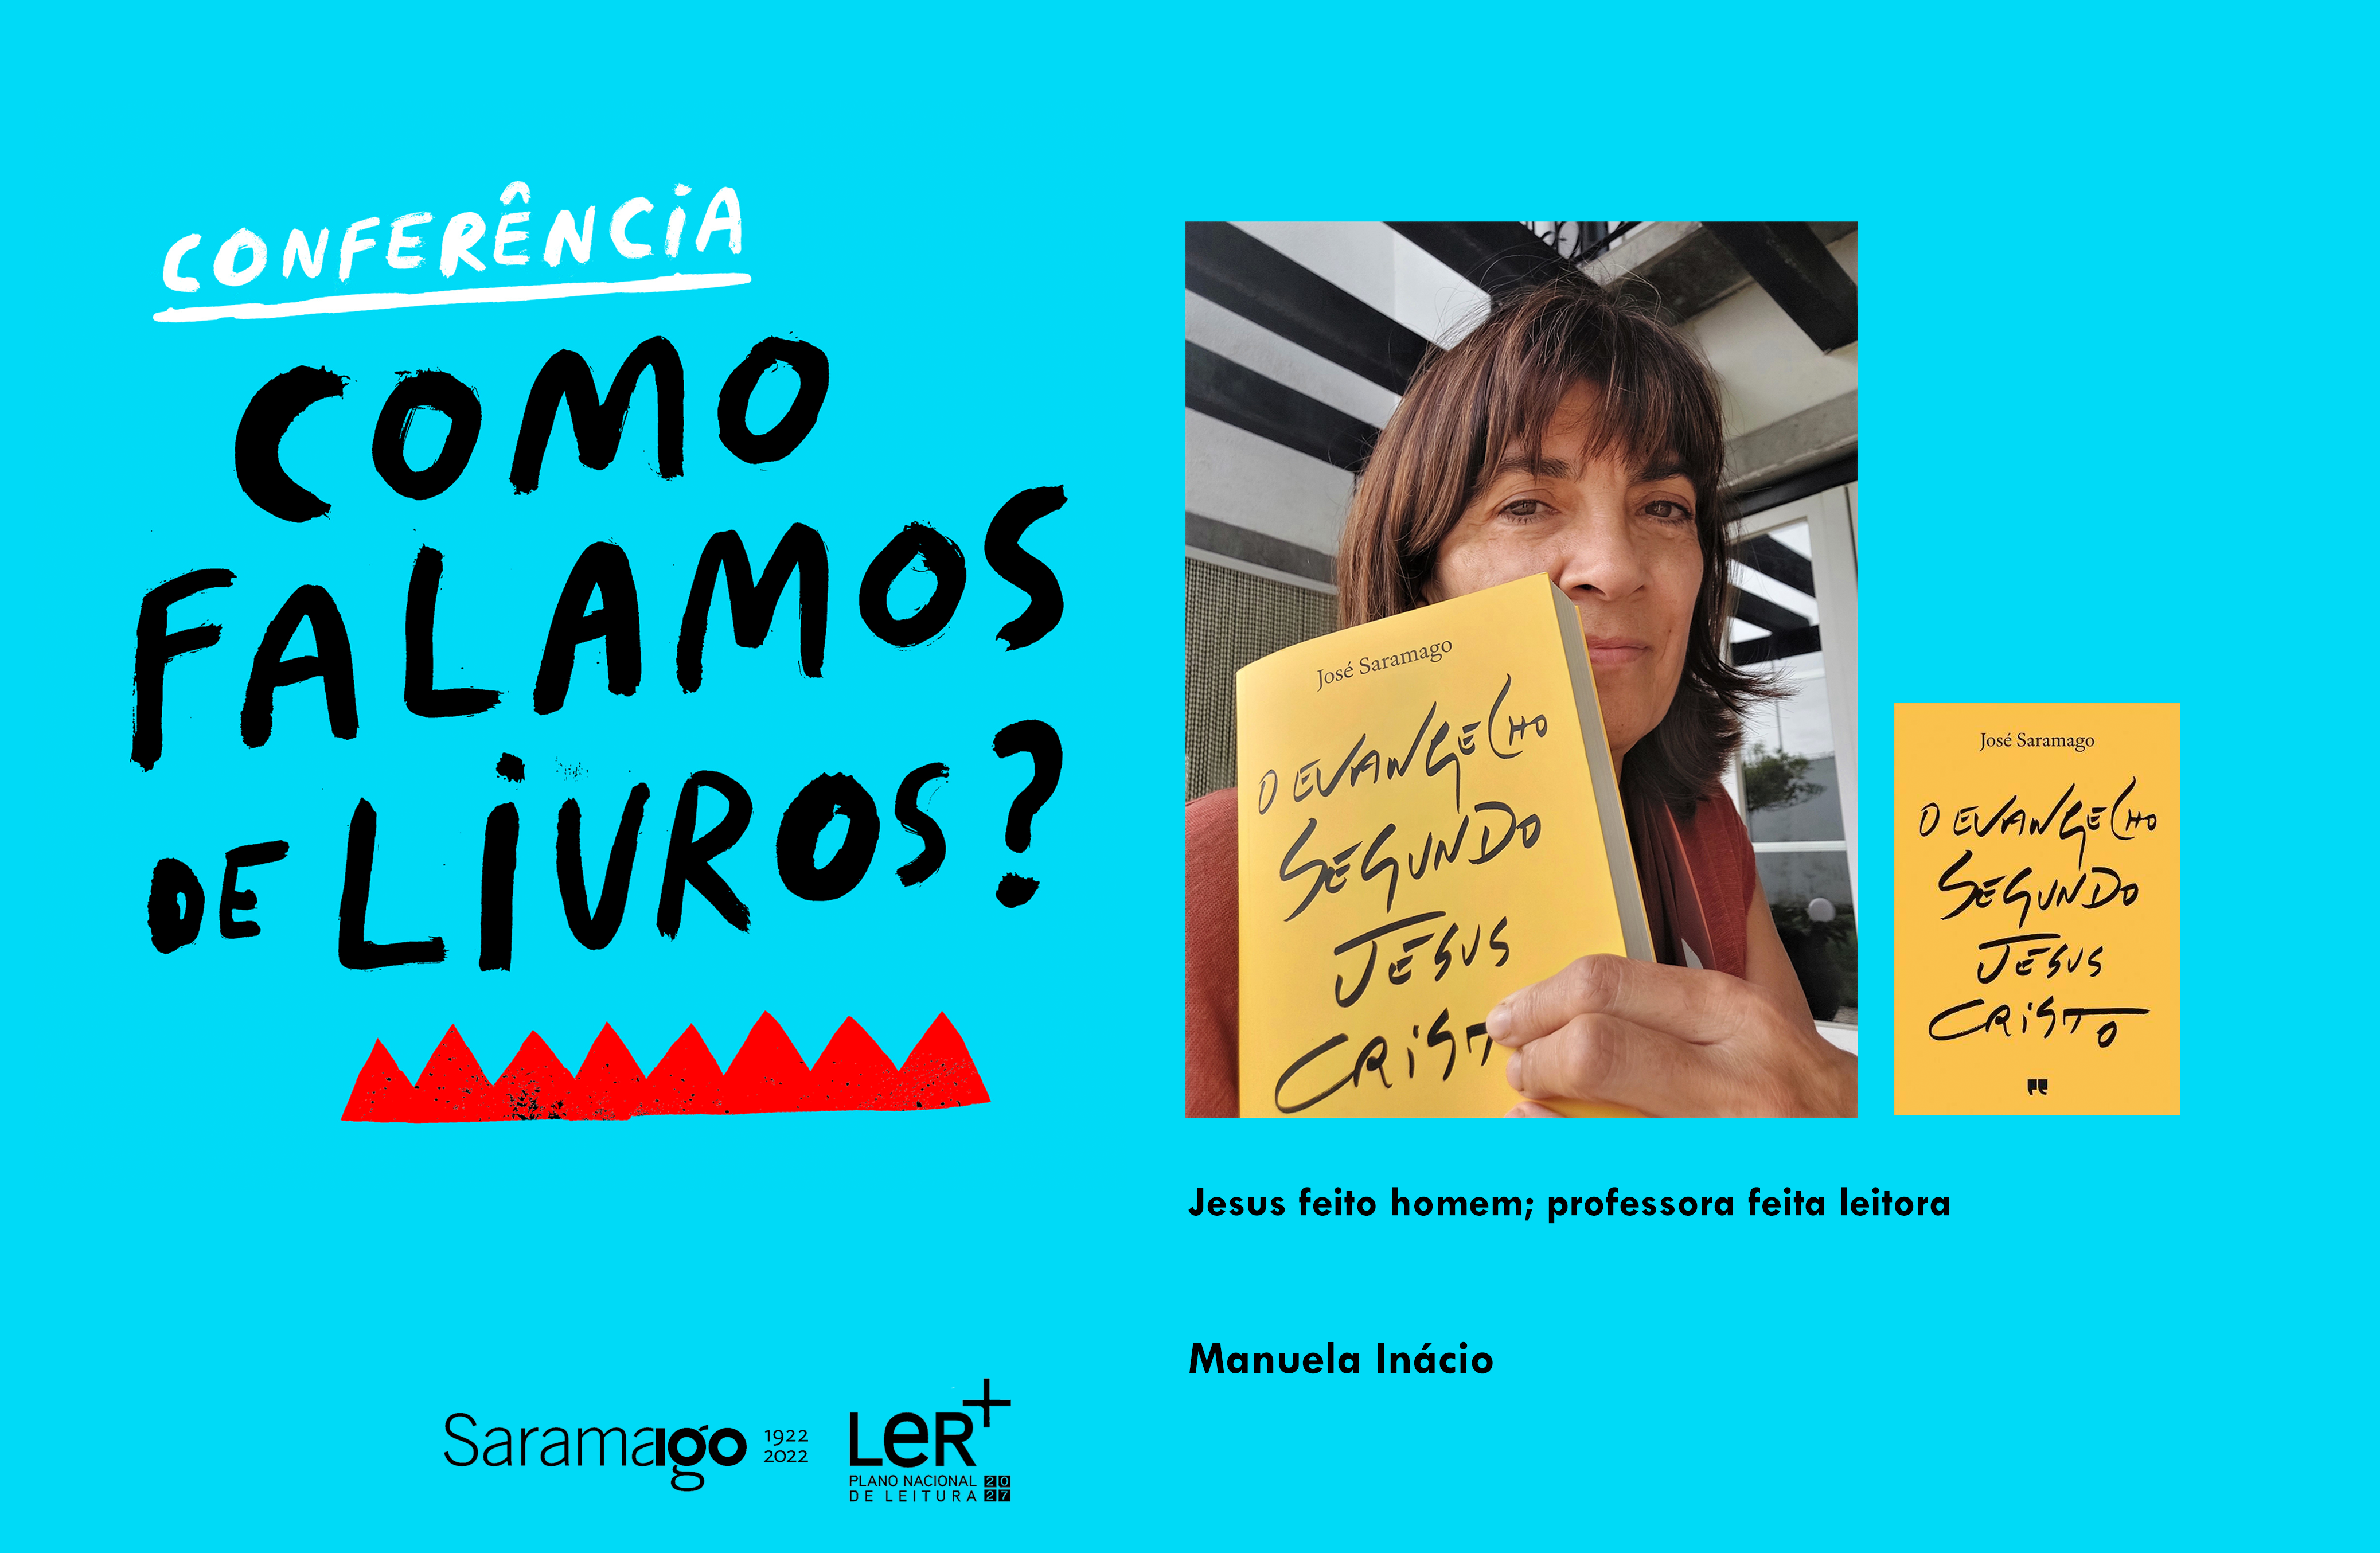 Ler_Saramago_MInacio